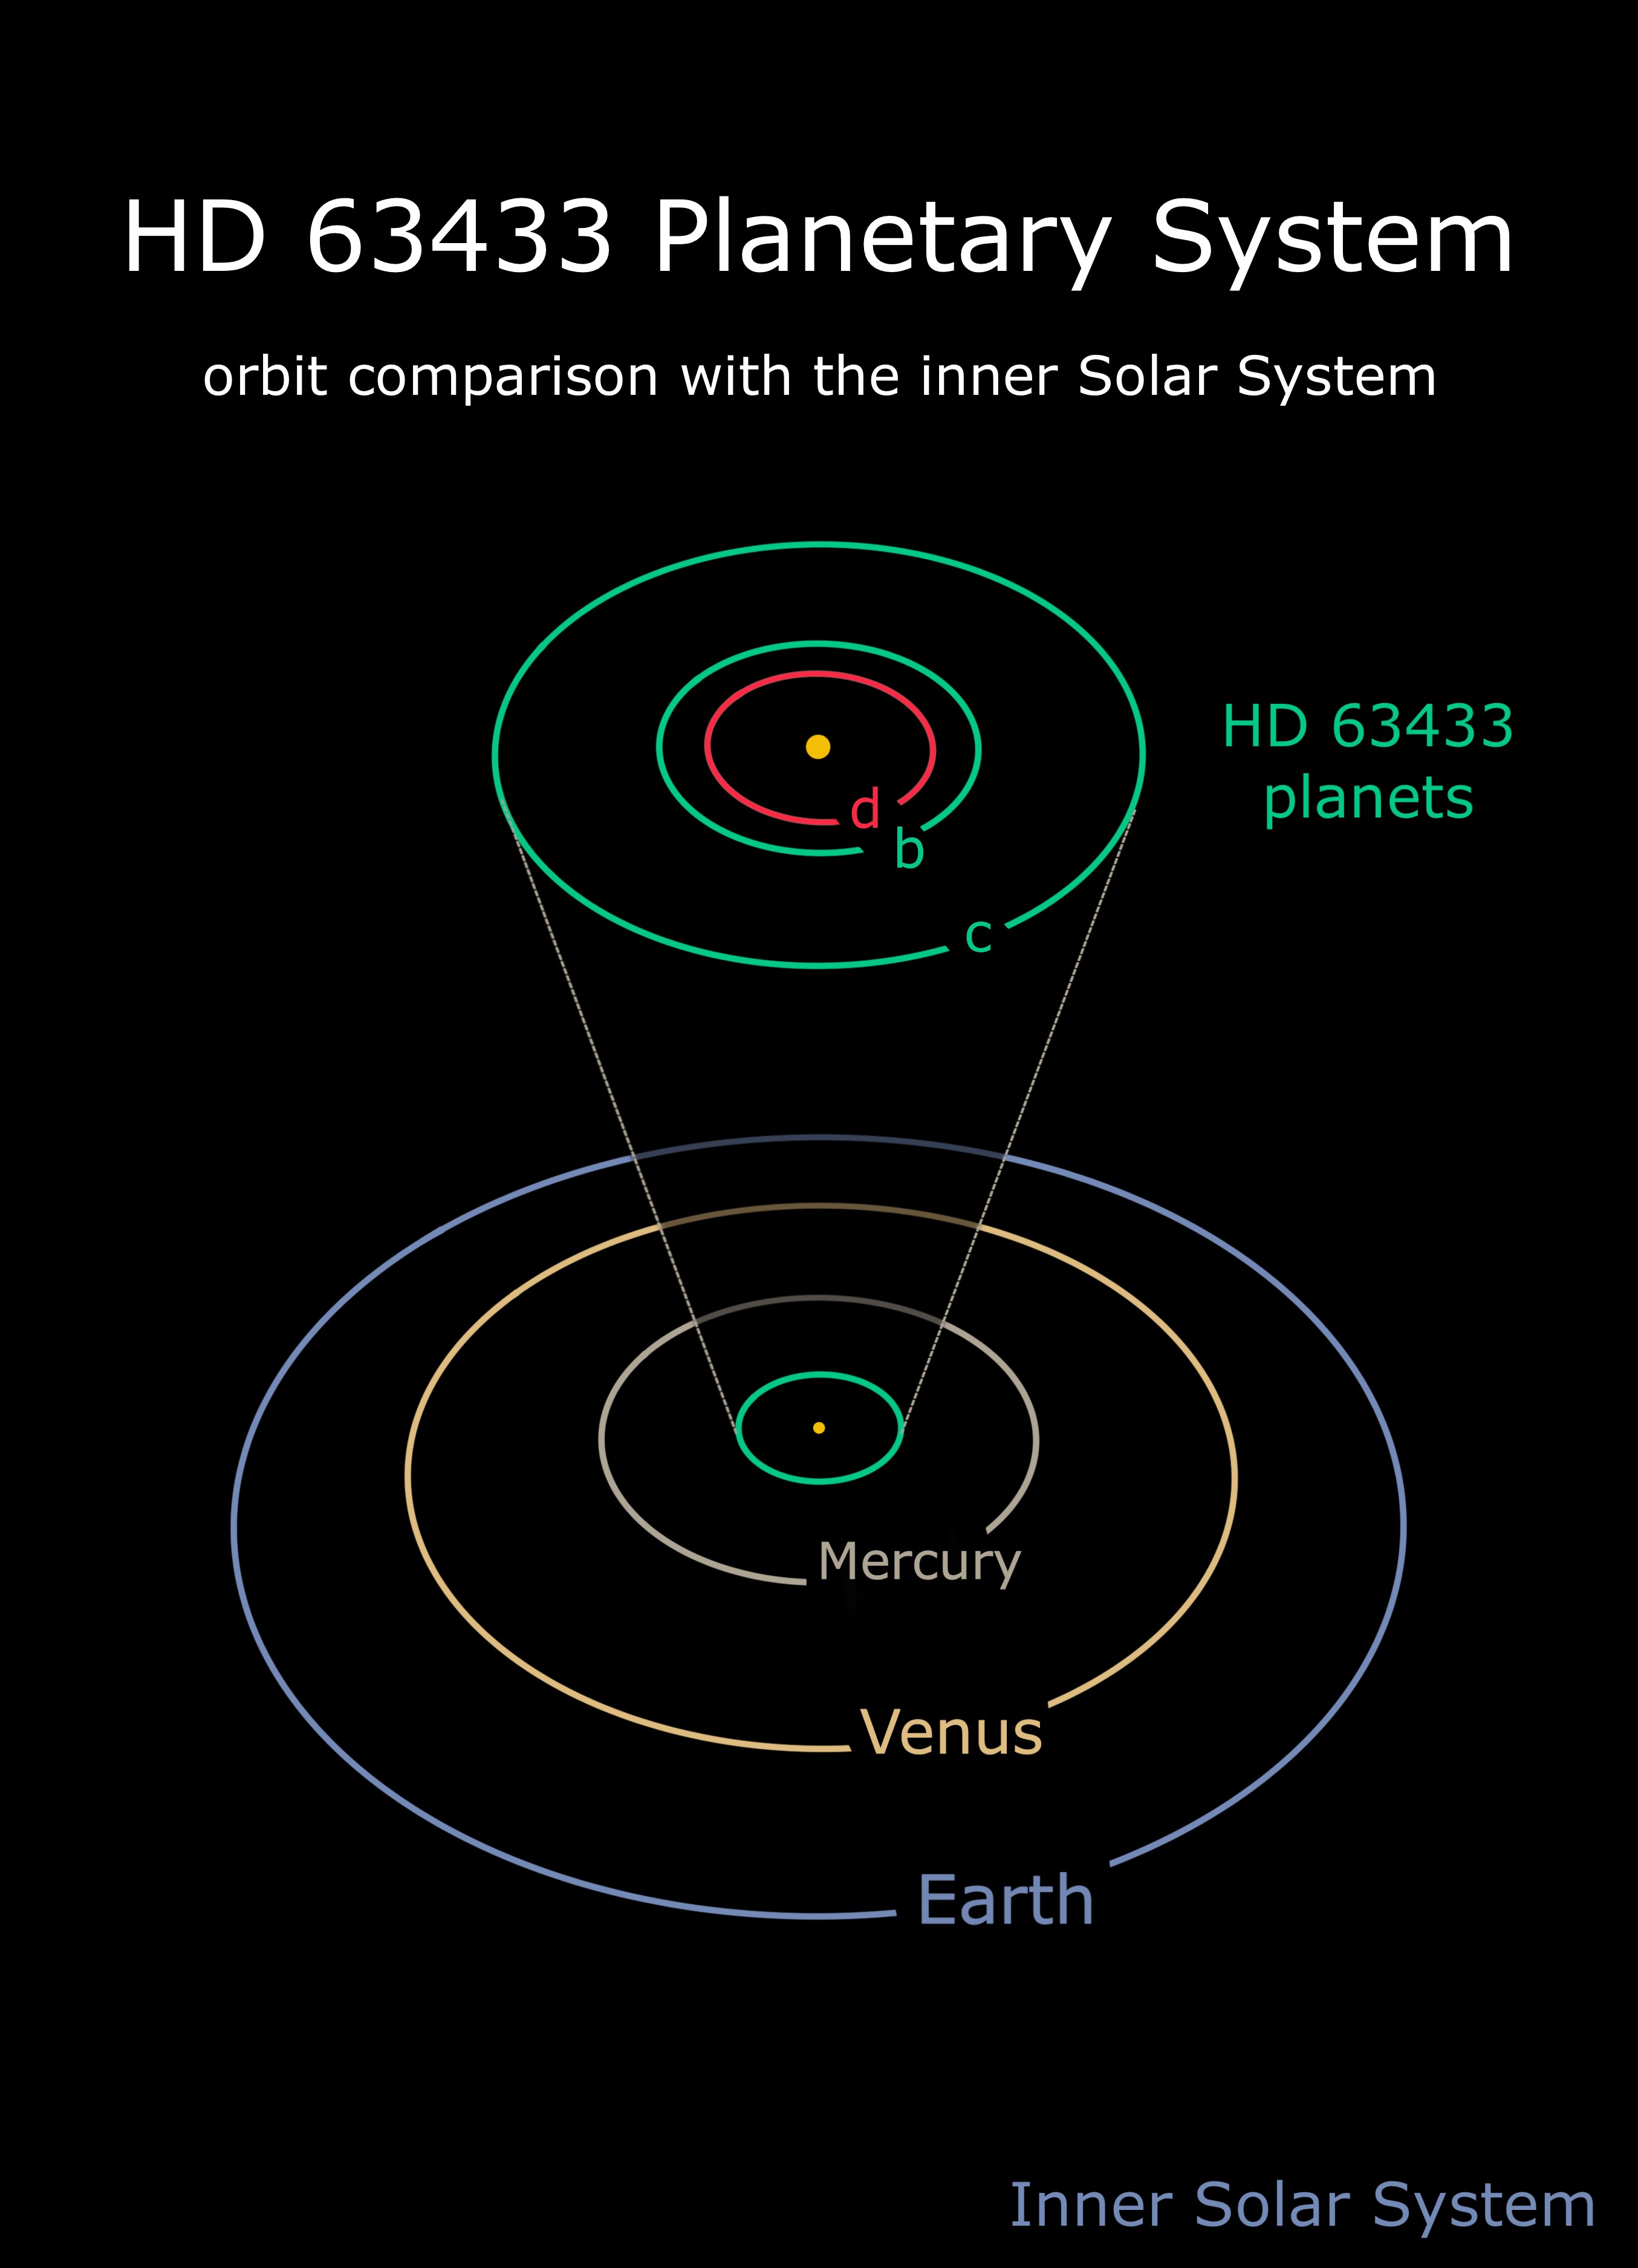 Illustration comparing orbit earth-like lava planet to inner solar system